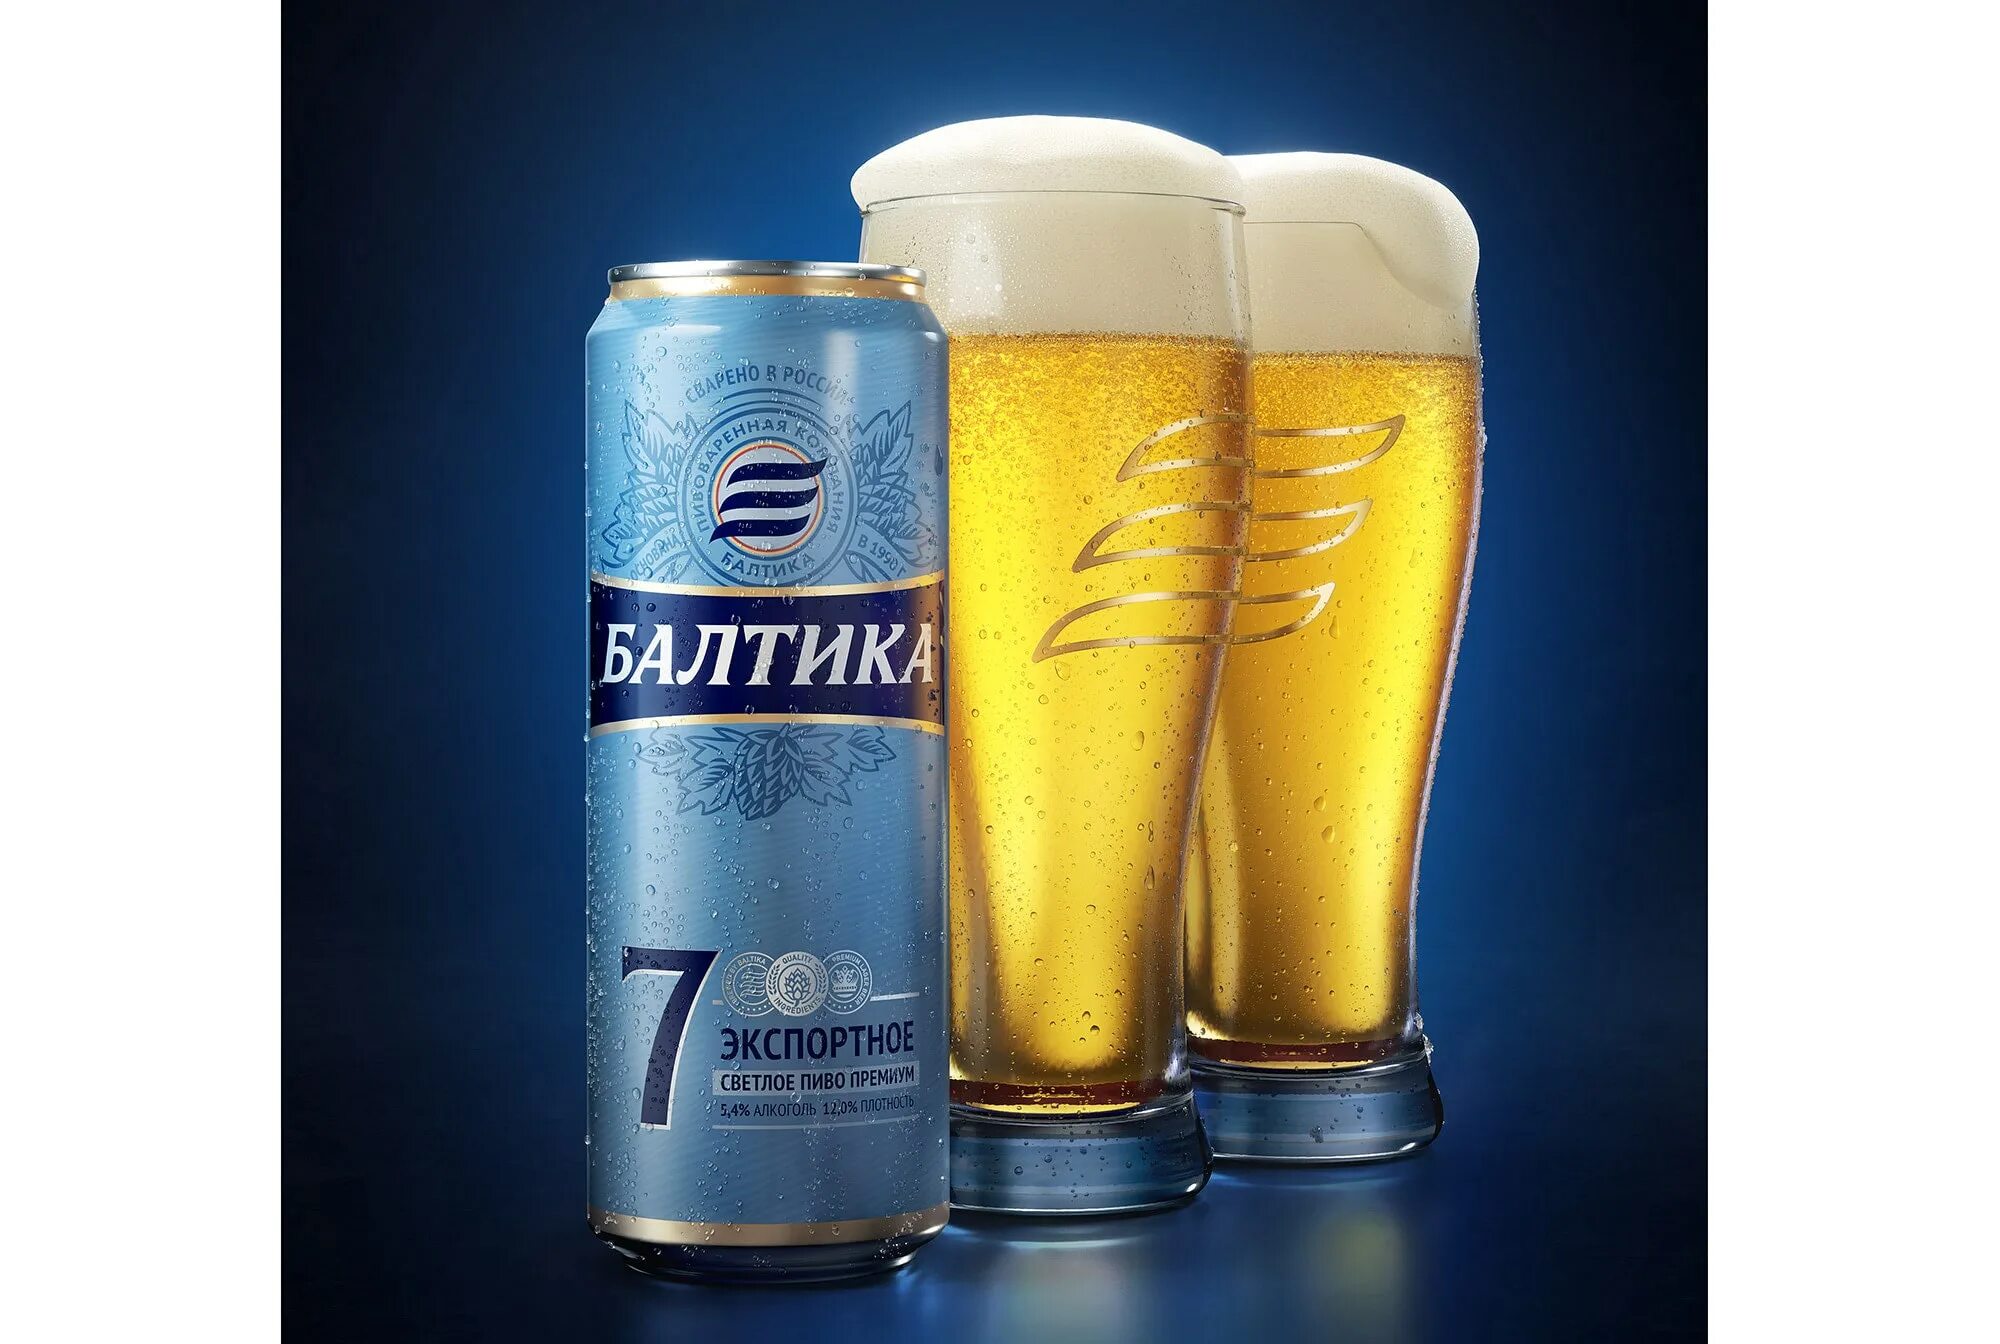 Пиво семерка. Пиво Балтика 7. Пиво Балтика семерка. Балтика 7 Экспортное премиум жб. Baltika 7 пиво.